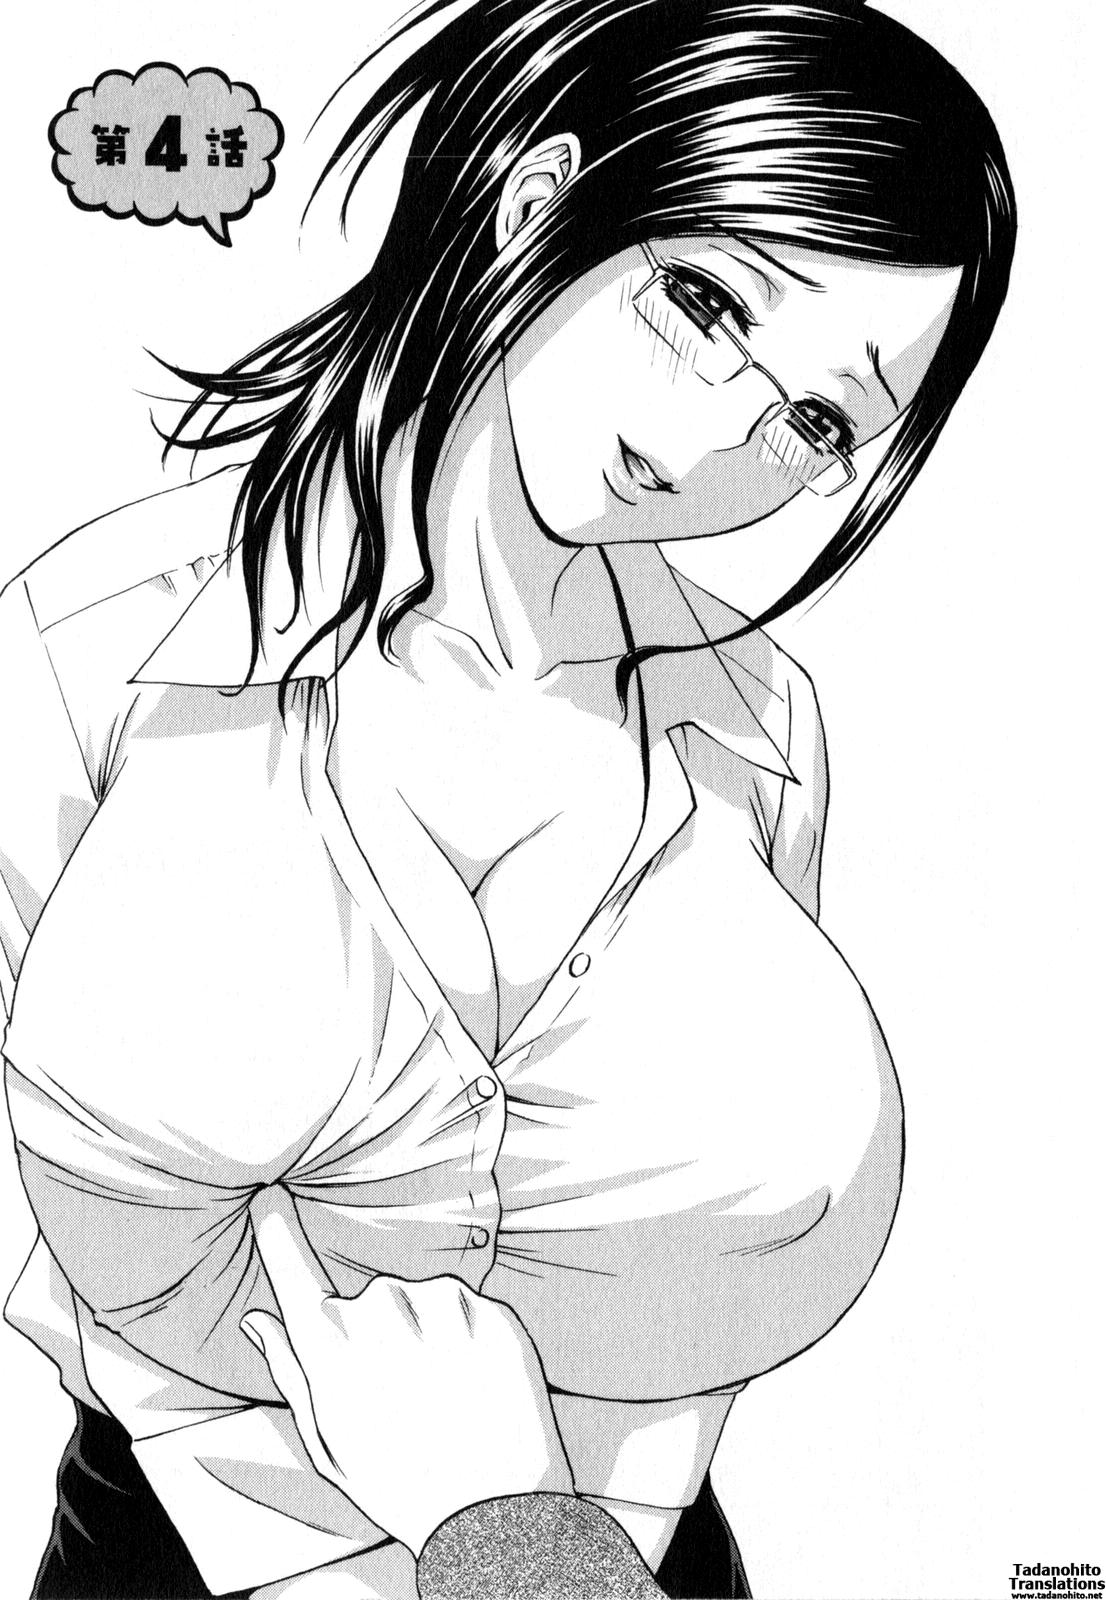 [Hidemaru] Life with Married Women Just Like a Manga 2 - Ch. 1-8 [English] {Tadanohito} 67